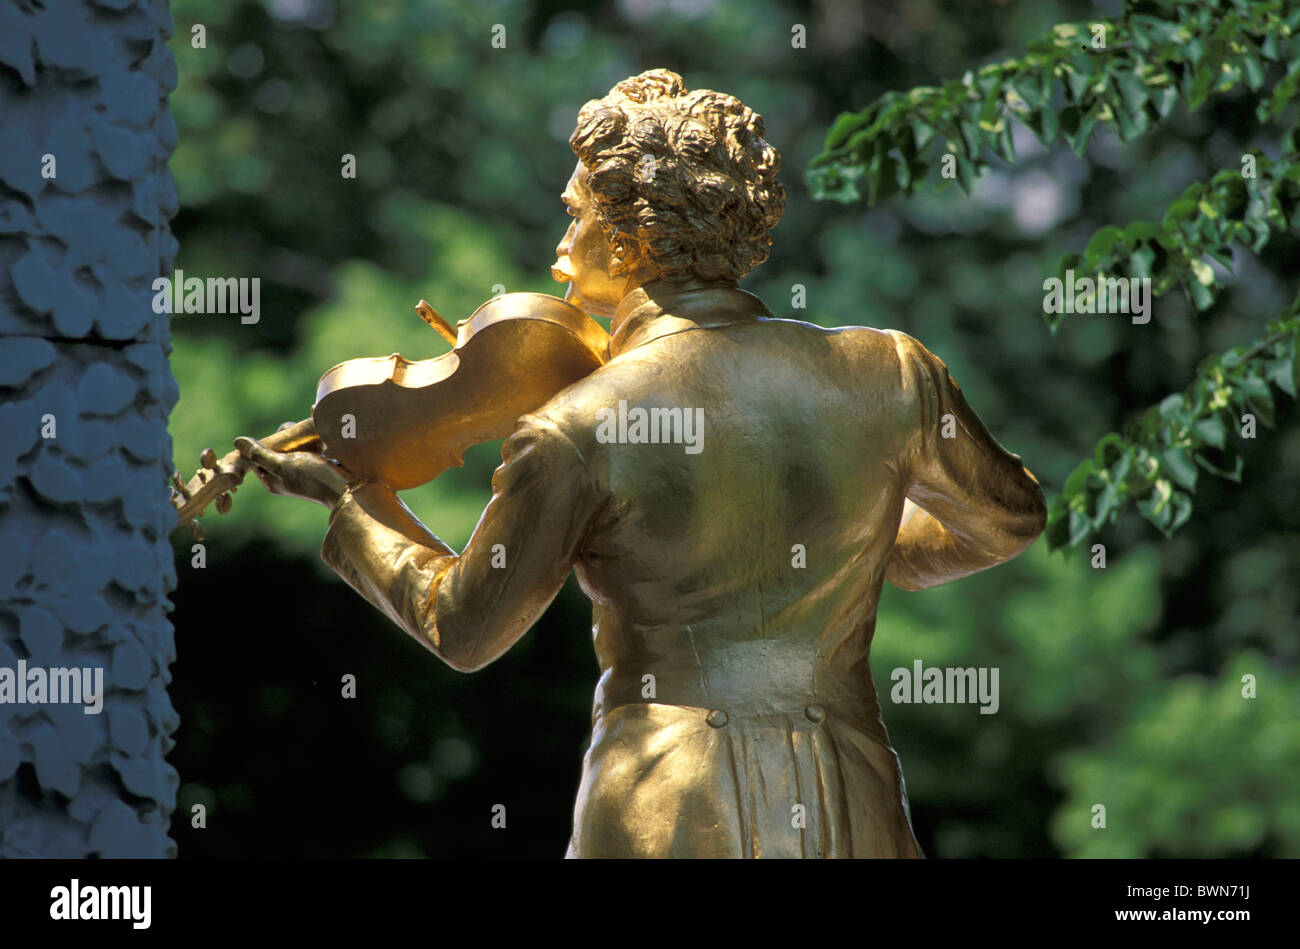 Austria Europe Johann Strauss II Statue Vienna golden sculpture waltz king art music history culture compo Stock Photo